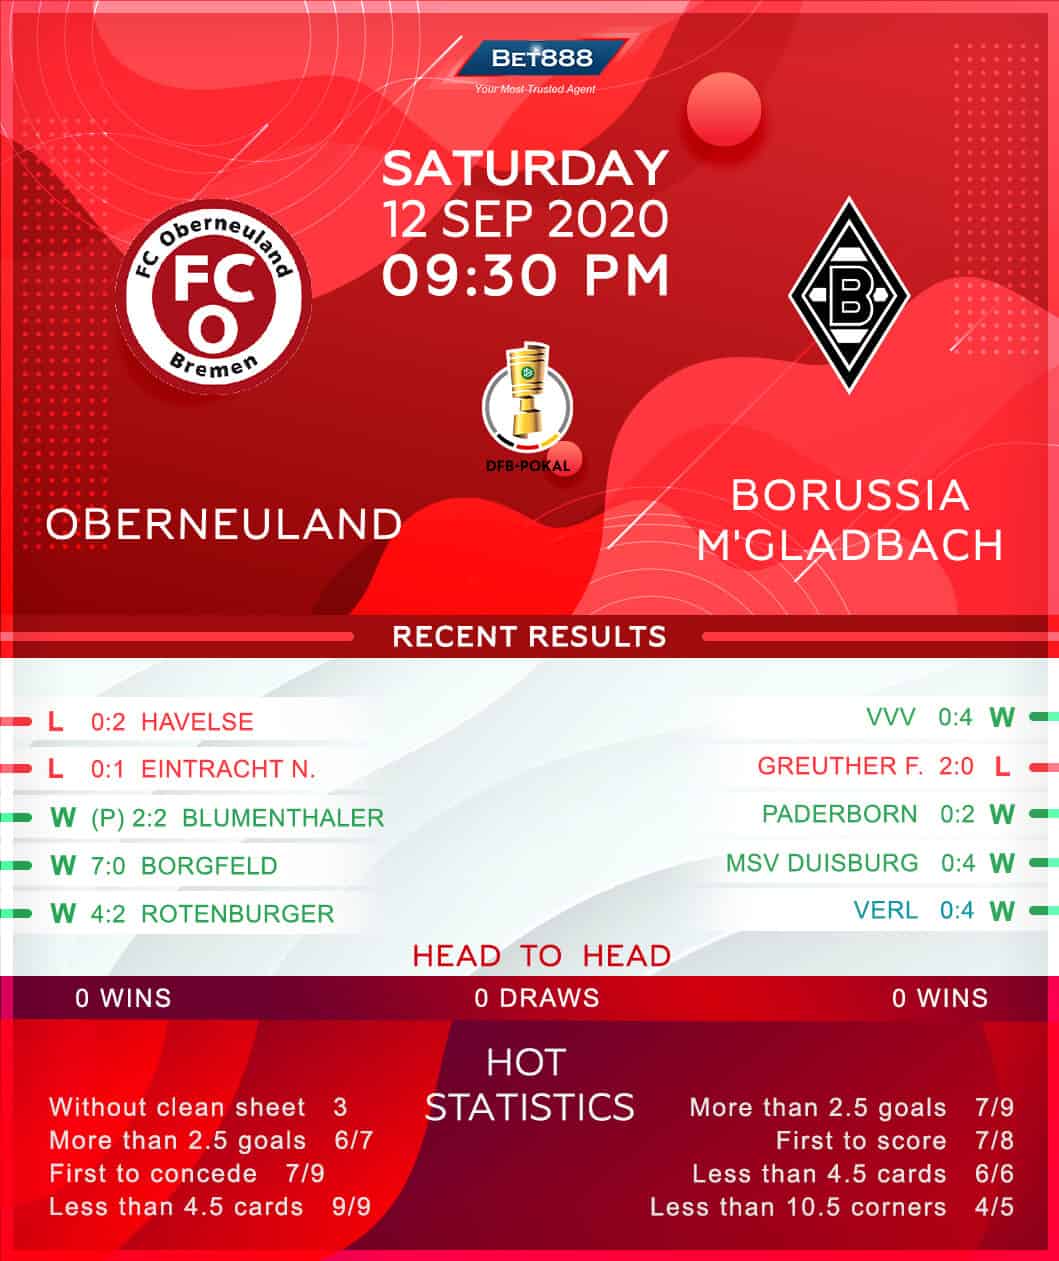 Oberneuland vs Borussia Mönchengladbach 12/09/20